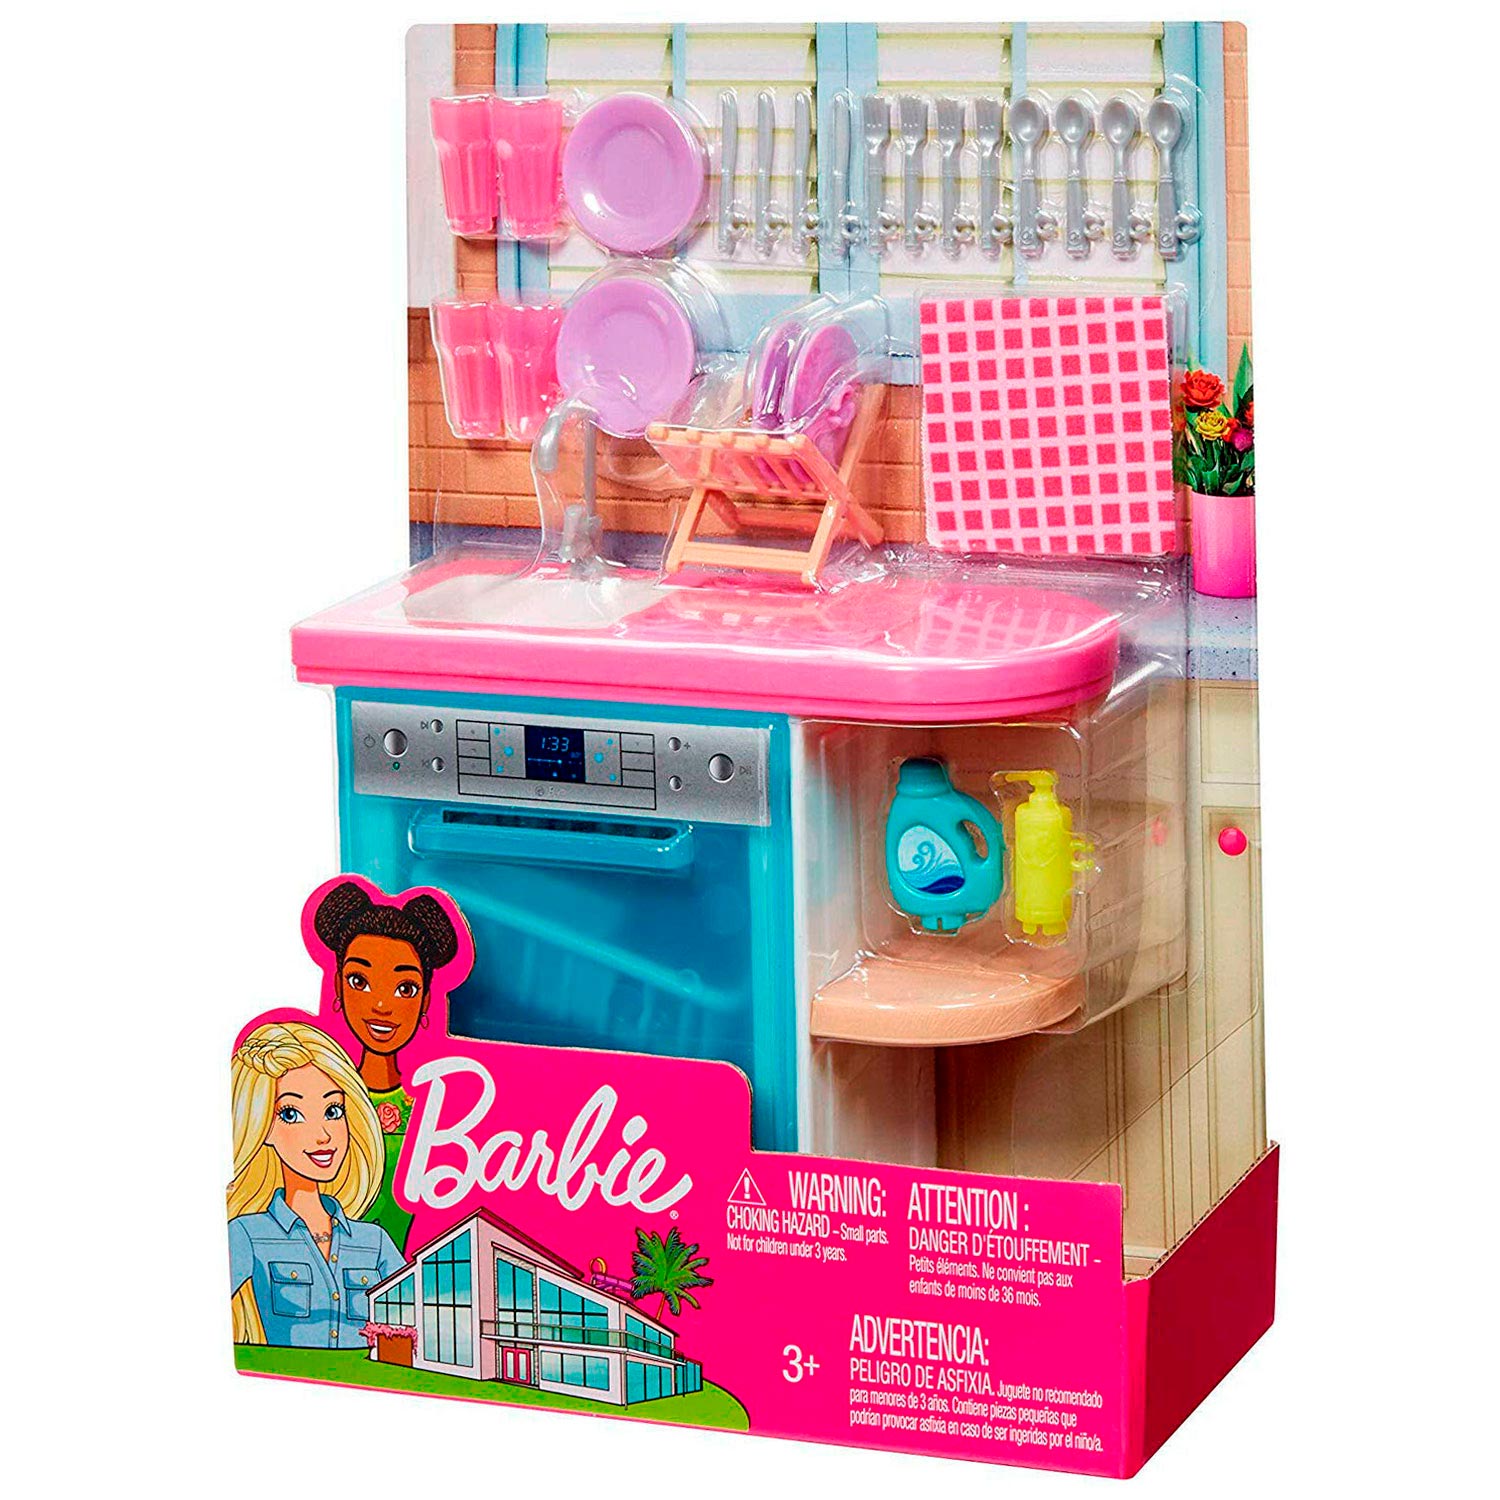 Barbie Meubels & Accessoires - Vaatwasser